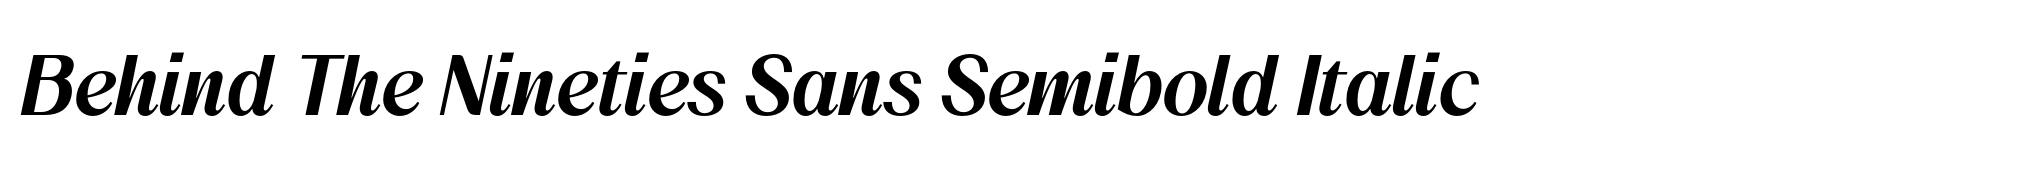 Behind The Nineties Sans Semibold Italic image